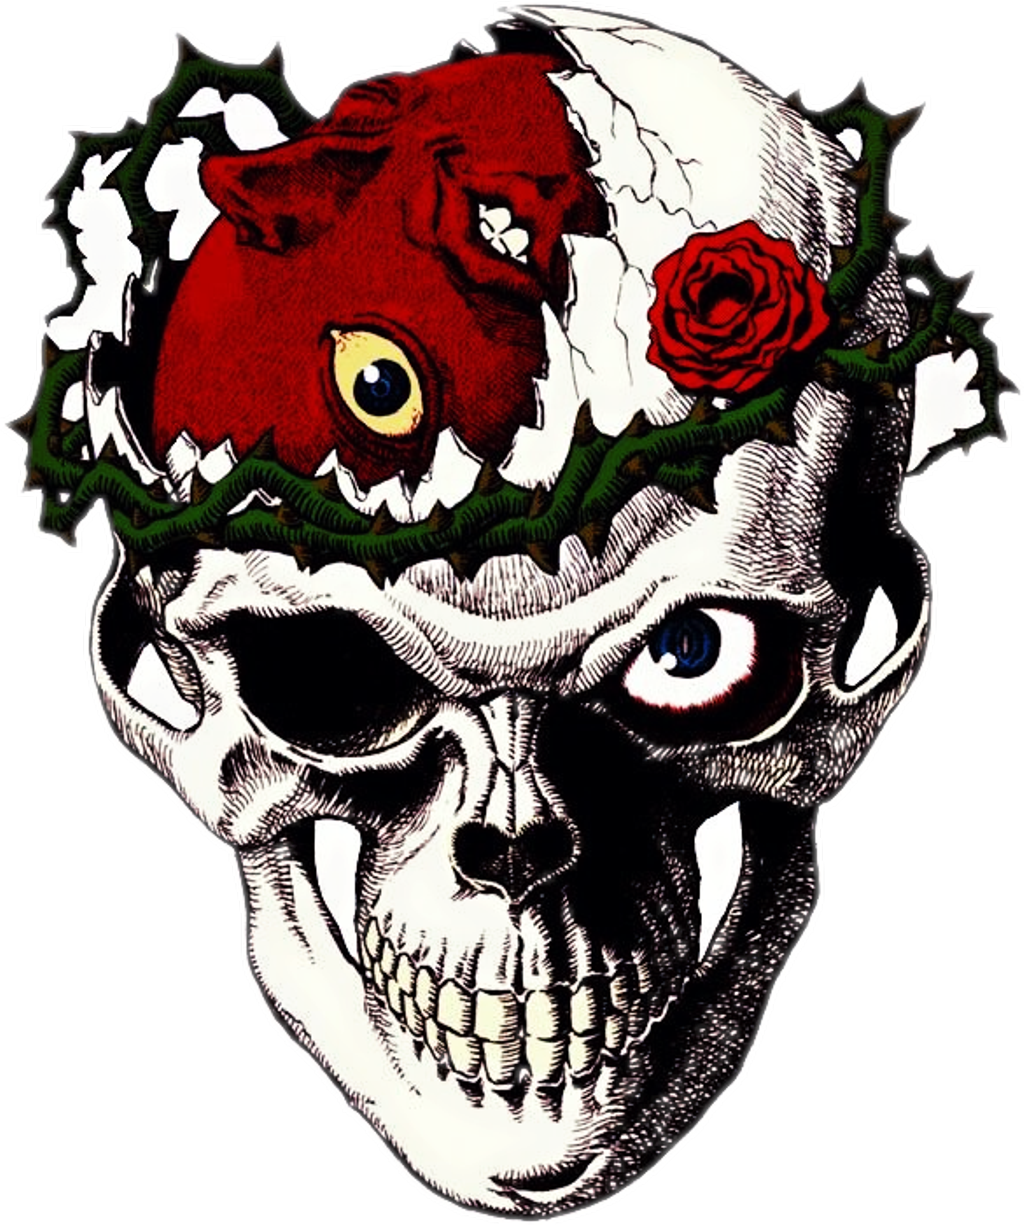 Download Skull Berserk Darksouls Horror Png Image With No Background Pngkey Com